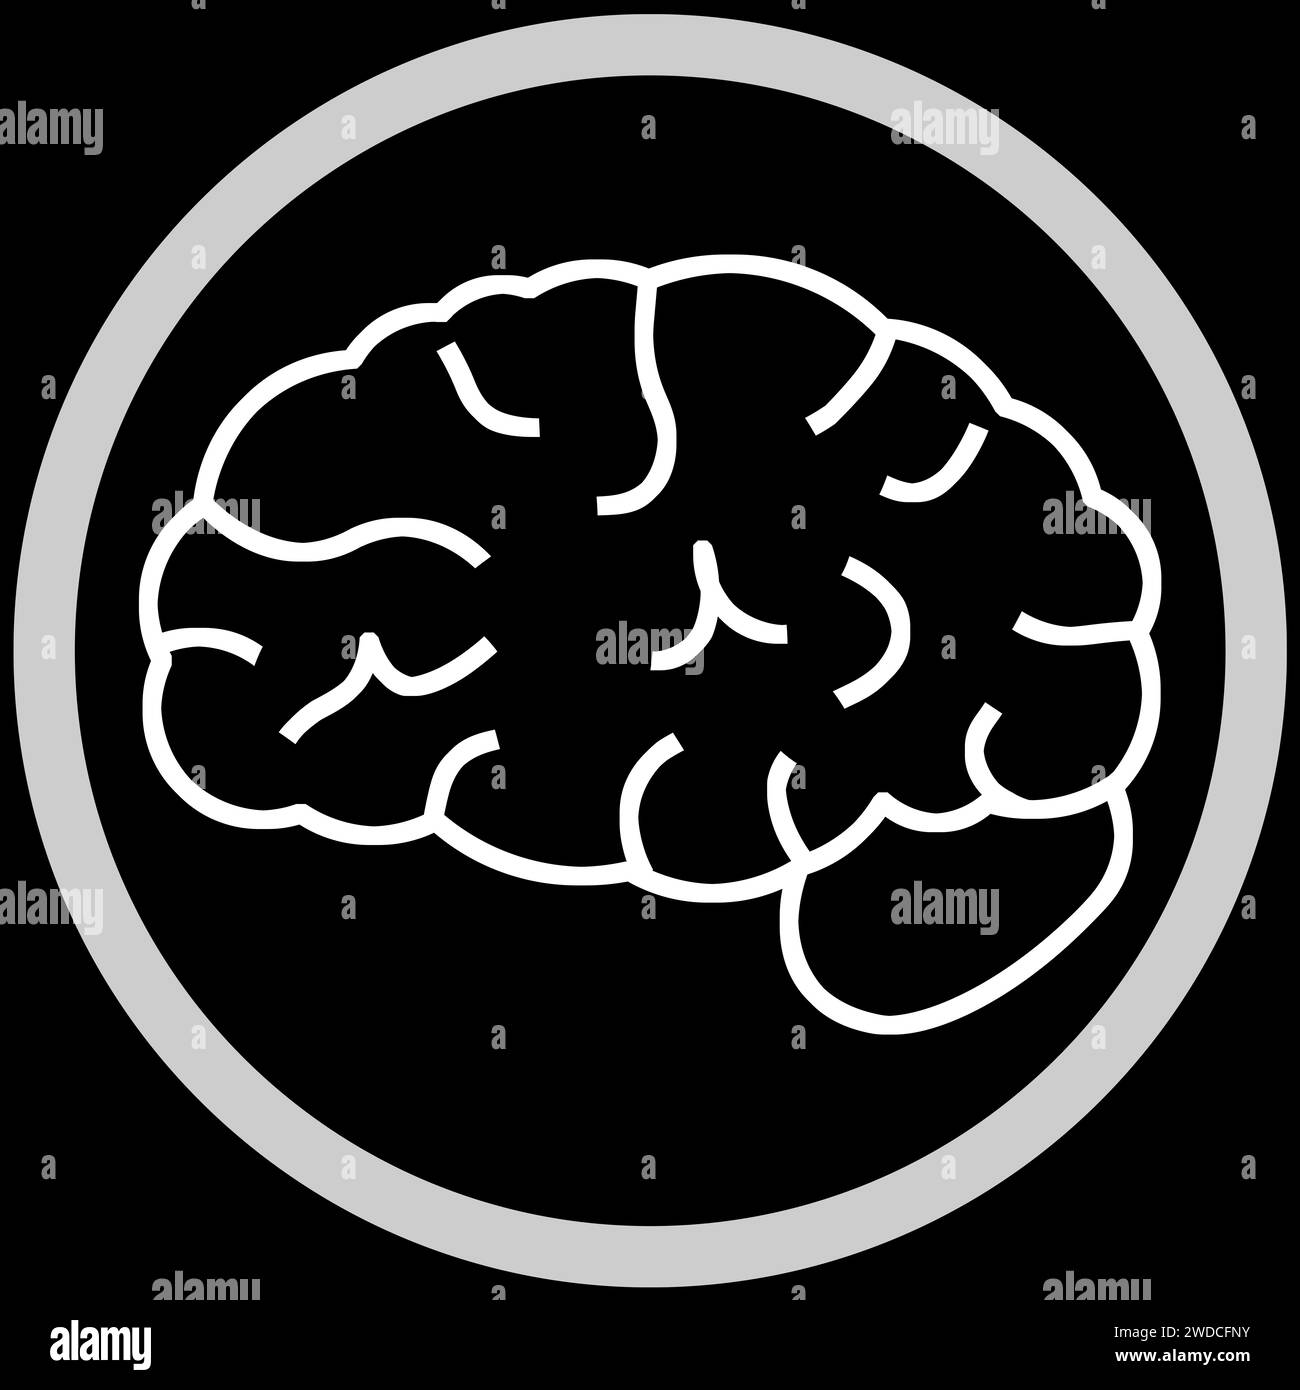 Brain in frame, illustration on black background Stock Photo